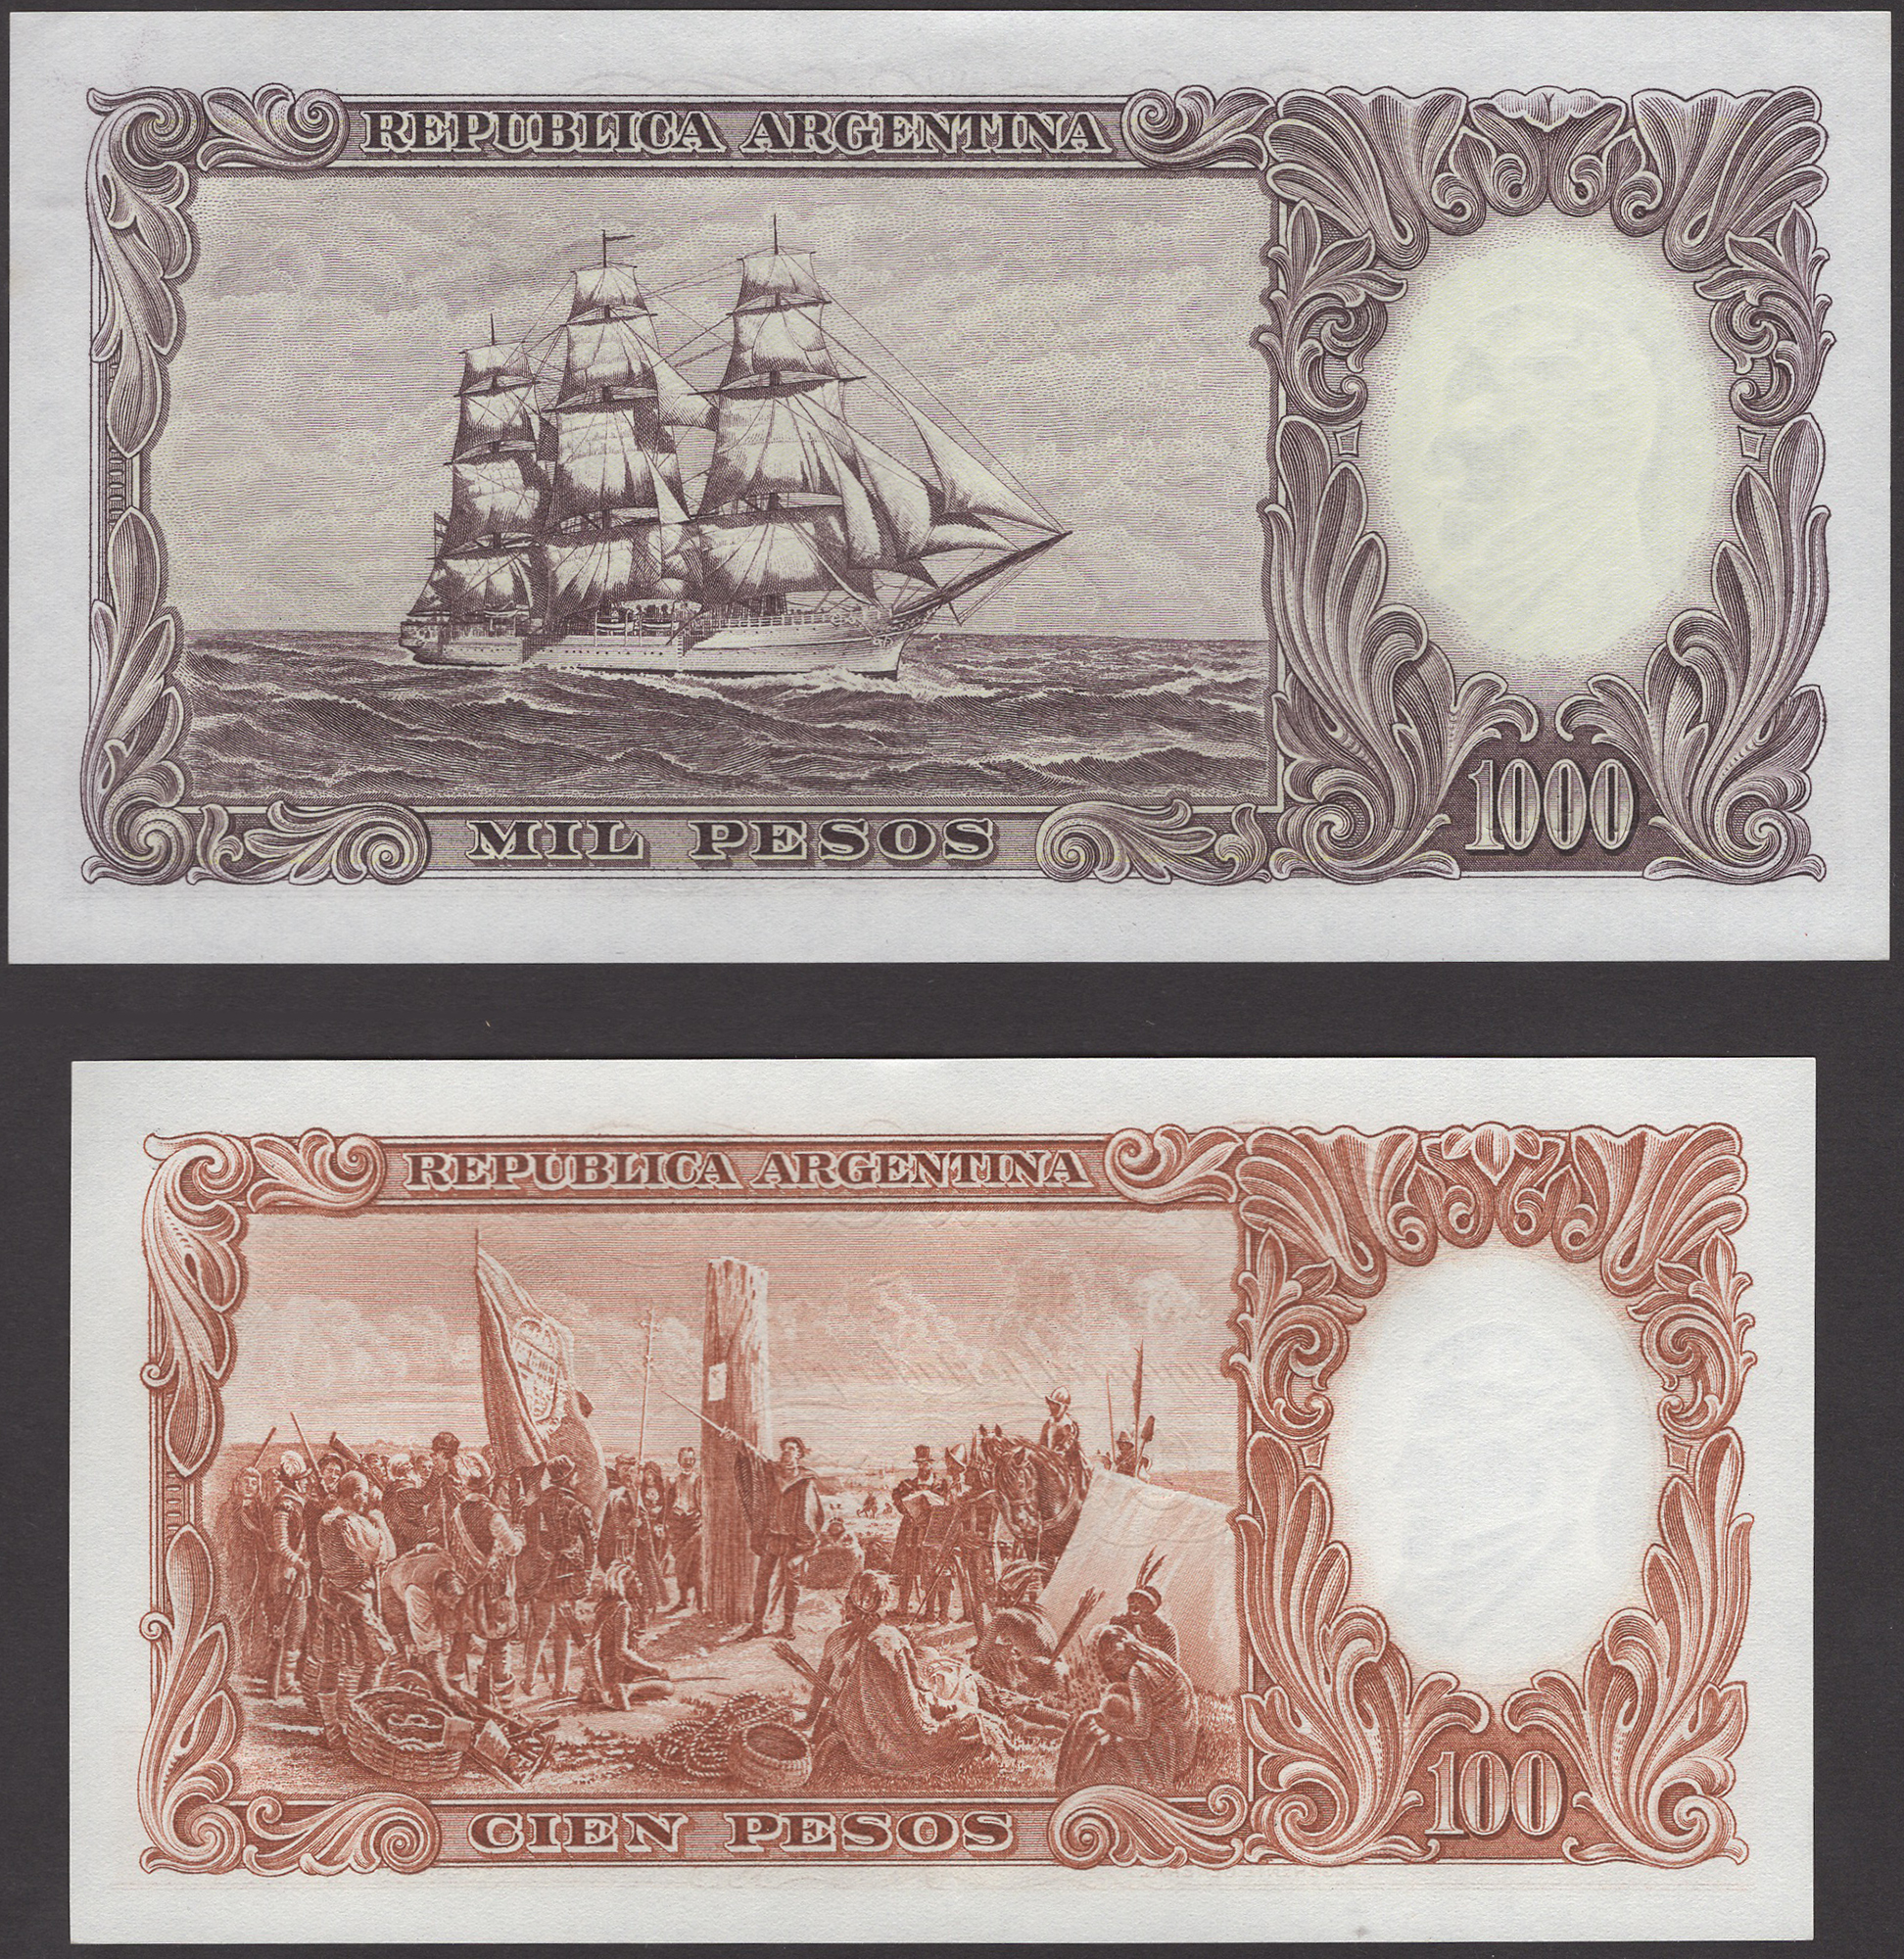 El Banco Central de la Republica Argentina, 100 Pesos (21), 1967-69, serial numbers 14348321... - Image 2 of 2